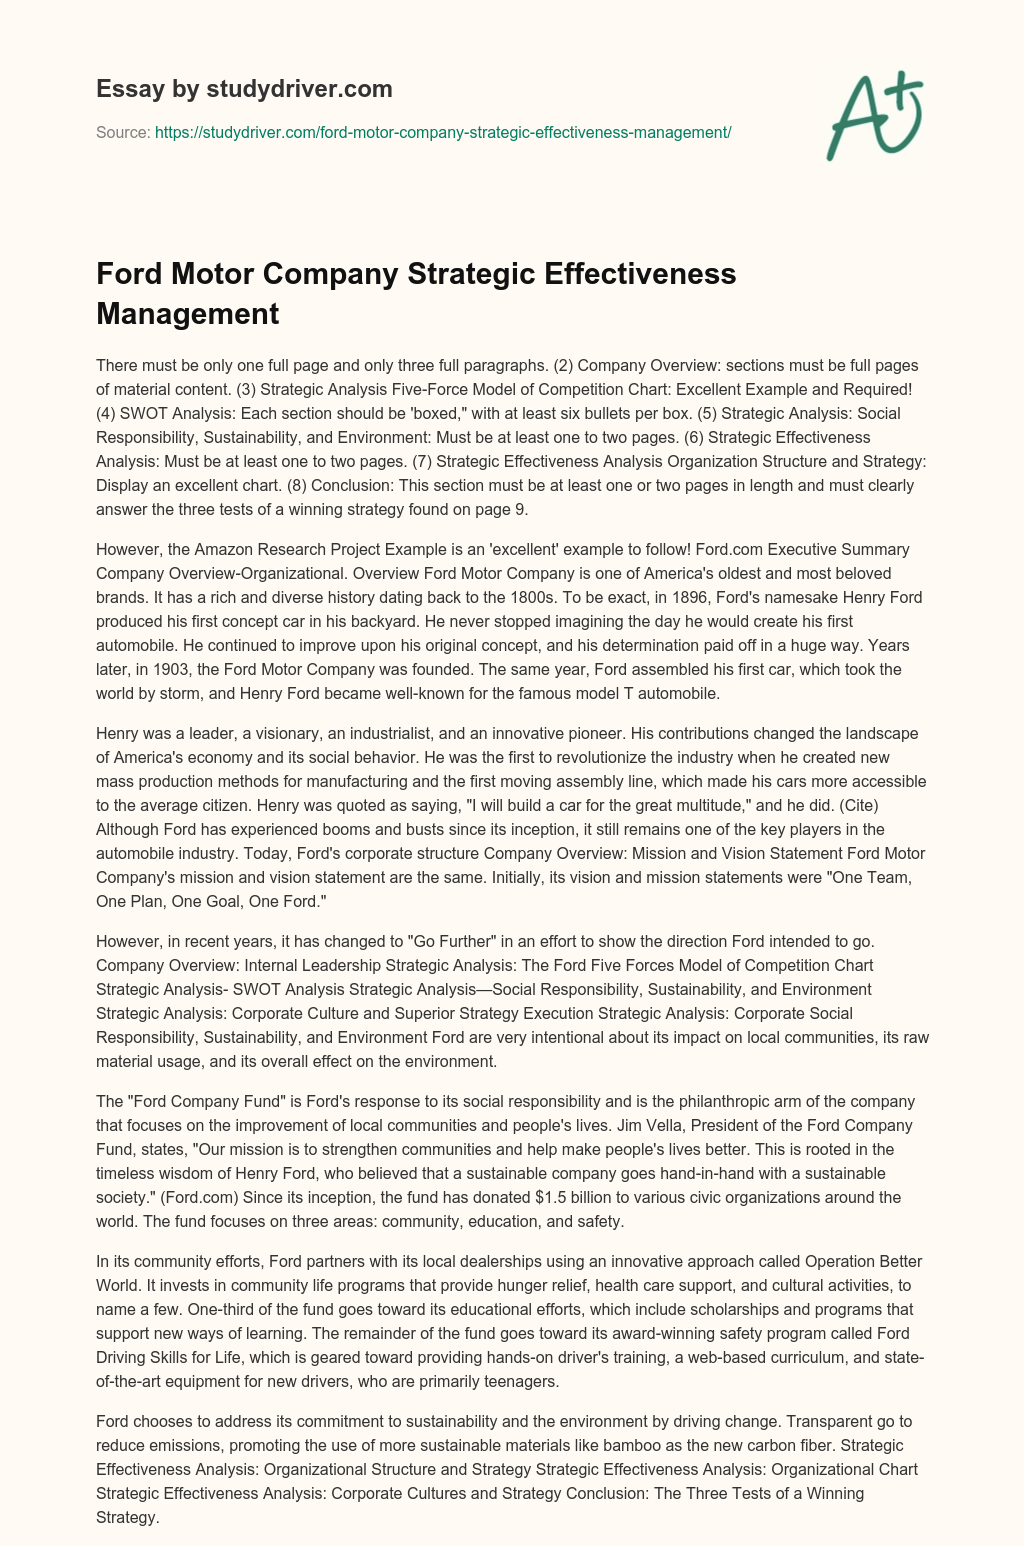 Ford Motor Company Strategic Effectiveness Management essay